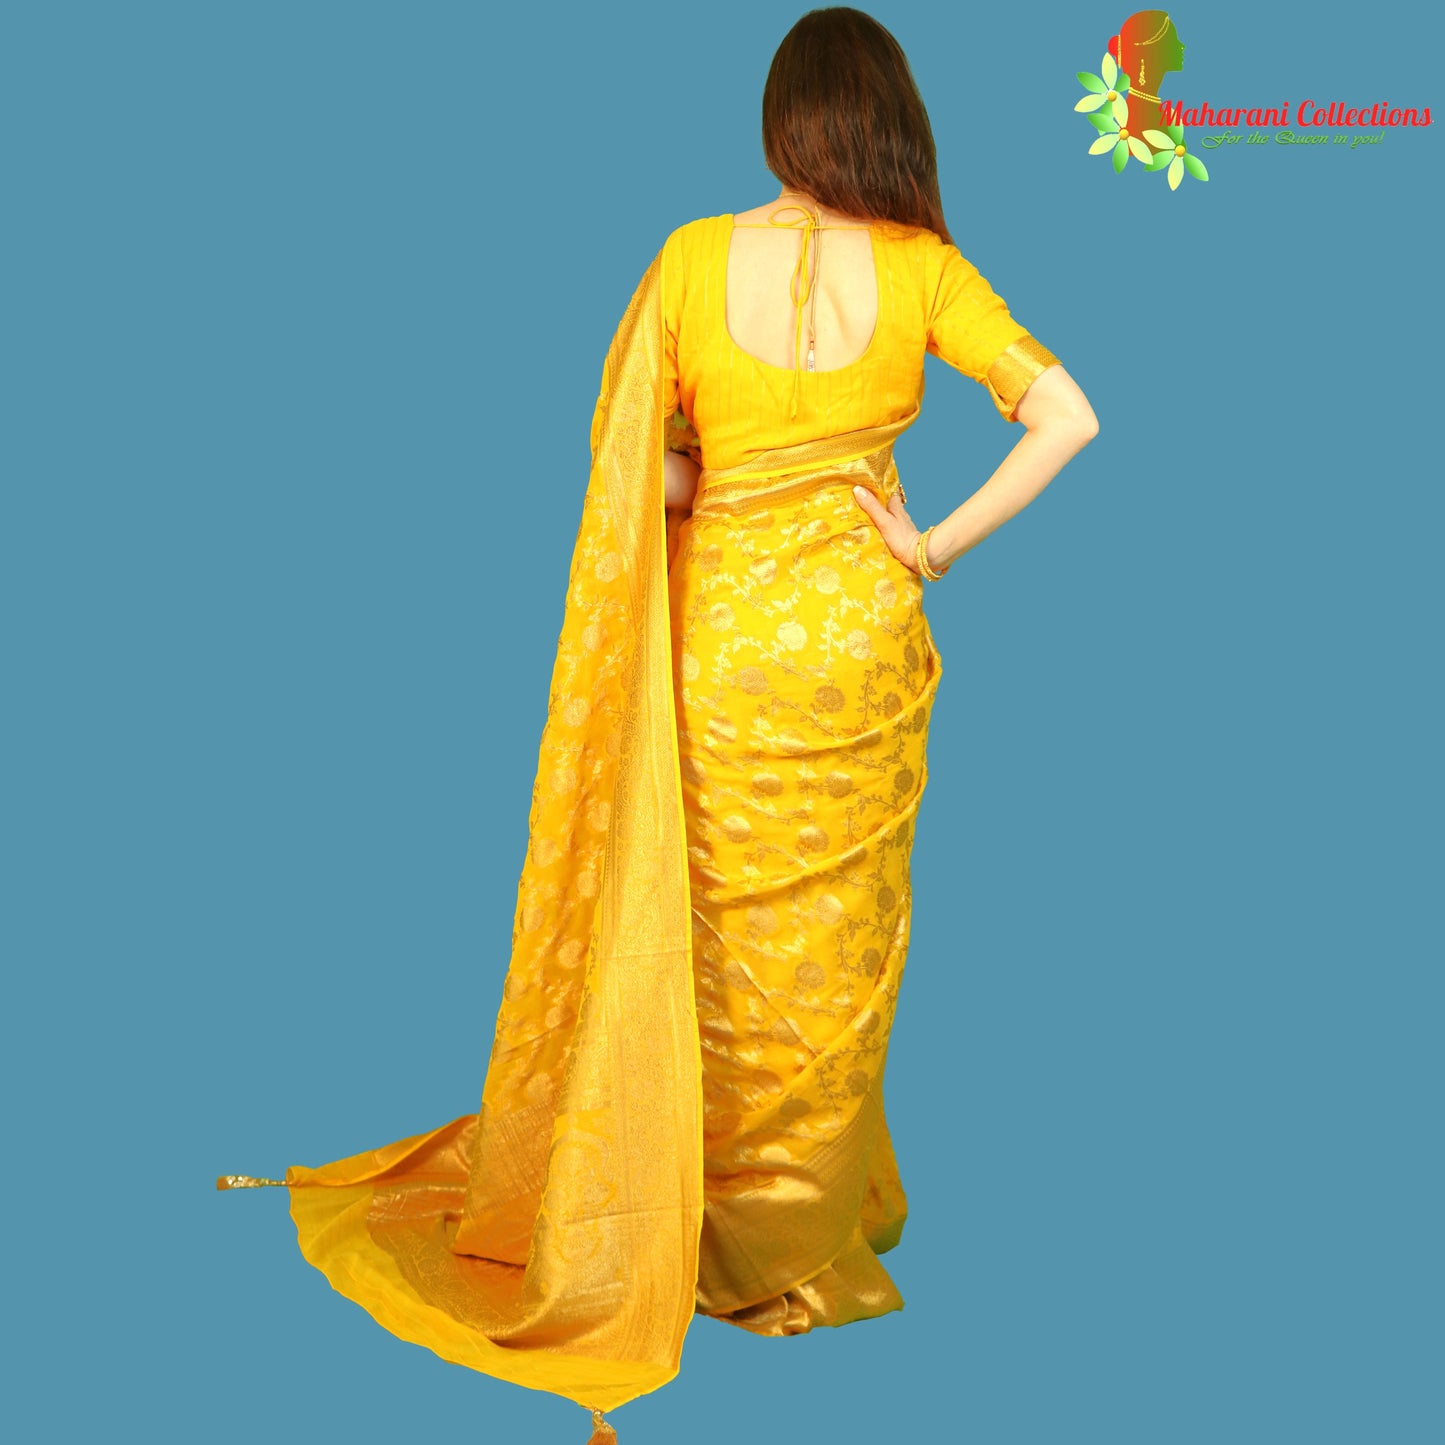 Maharani's Pure Banarasi Khaddi Georgette Saree - Yellow (with Stitched Blouse and Petticoat)